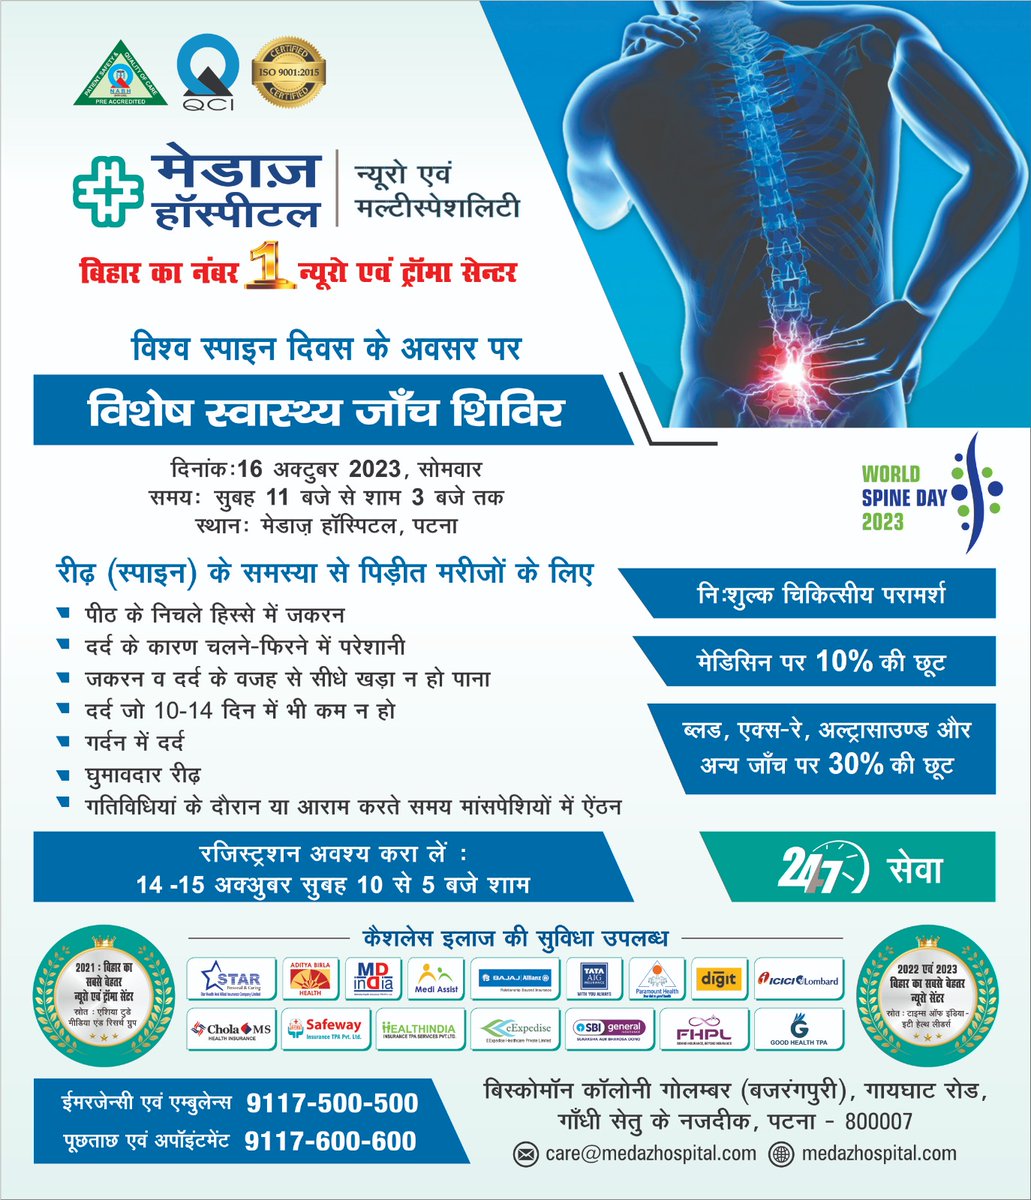 WORLD #SPINEDAY 2023
 #WorldSpineDay #SpineHealth
#LoveYourSpine #BackHealth
#SpineAwareness #PostureMatters
#SpineWellness #Healthcare #PatientSafety
#QualityCare #BiharHealthcare
#HealthCamp  #Medaz #Medazhospital #patna #bihar #india